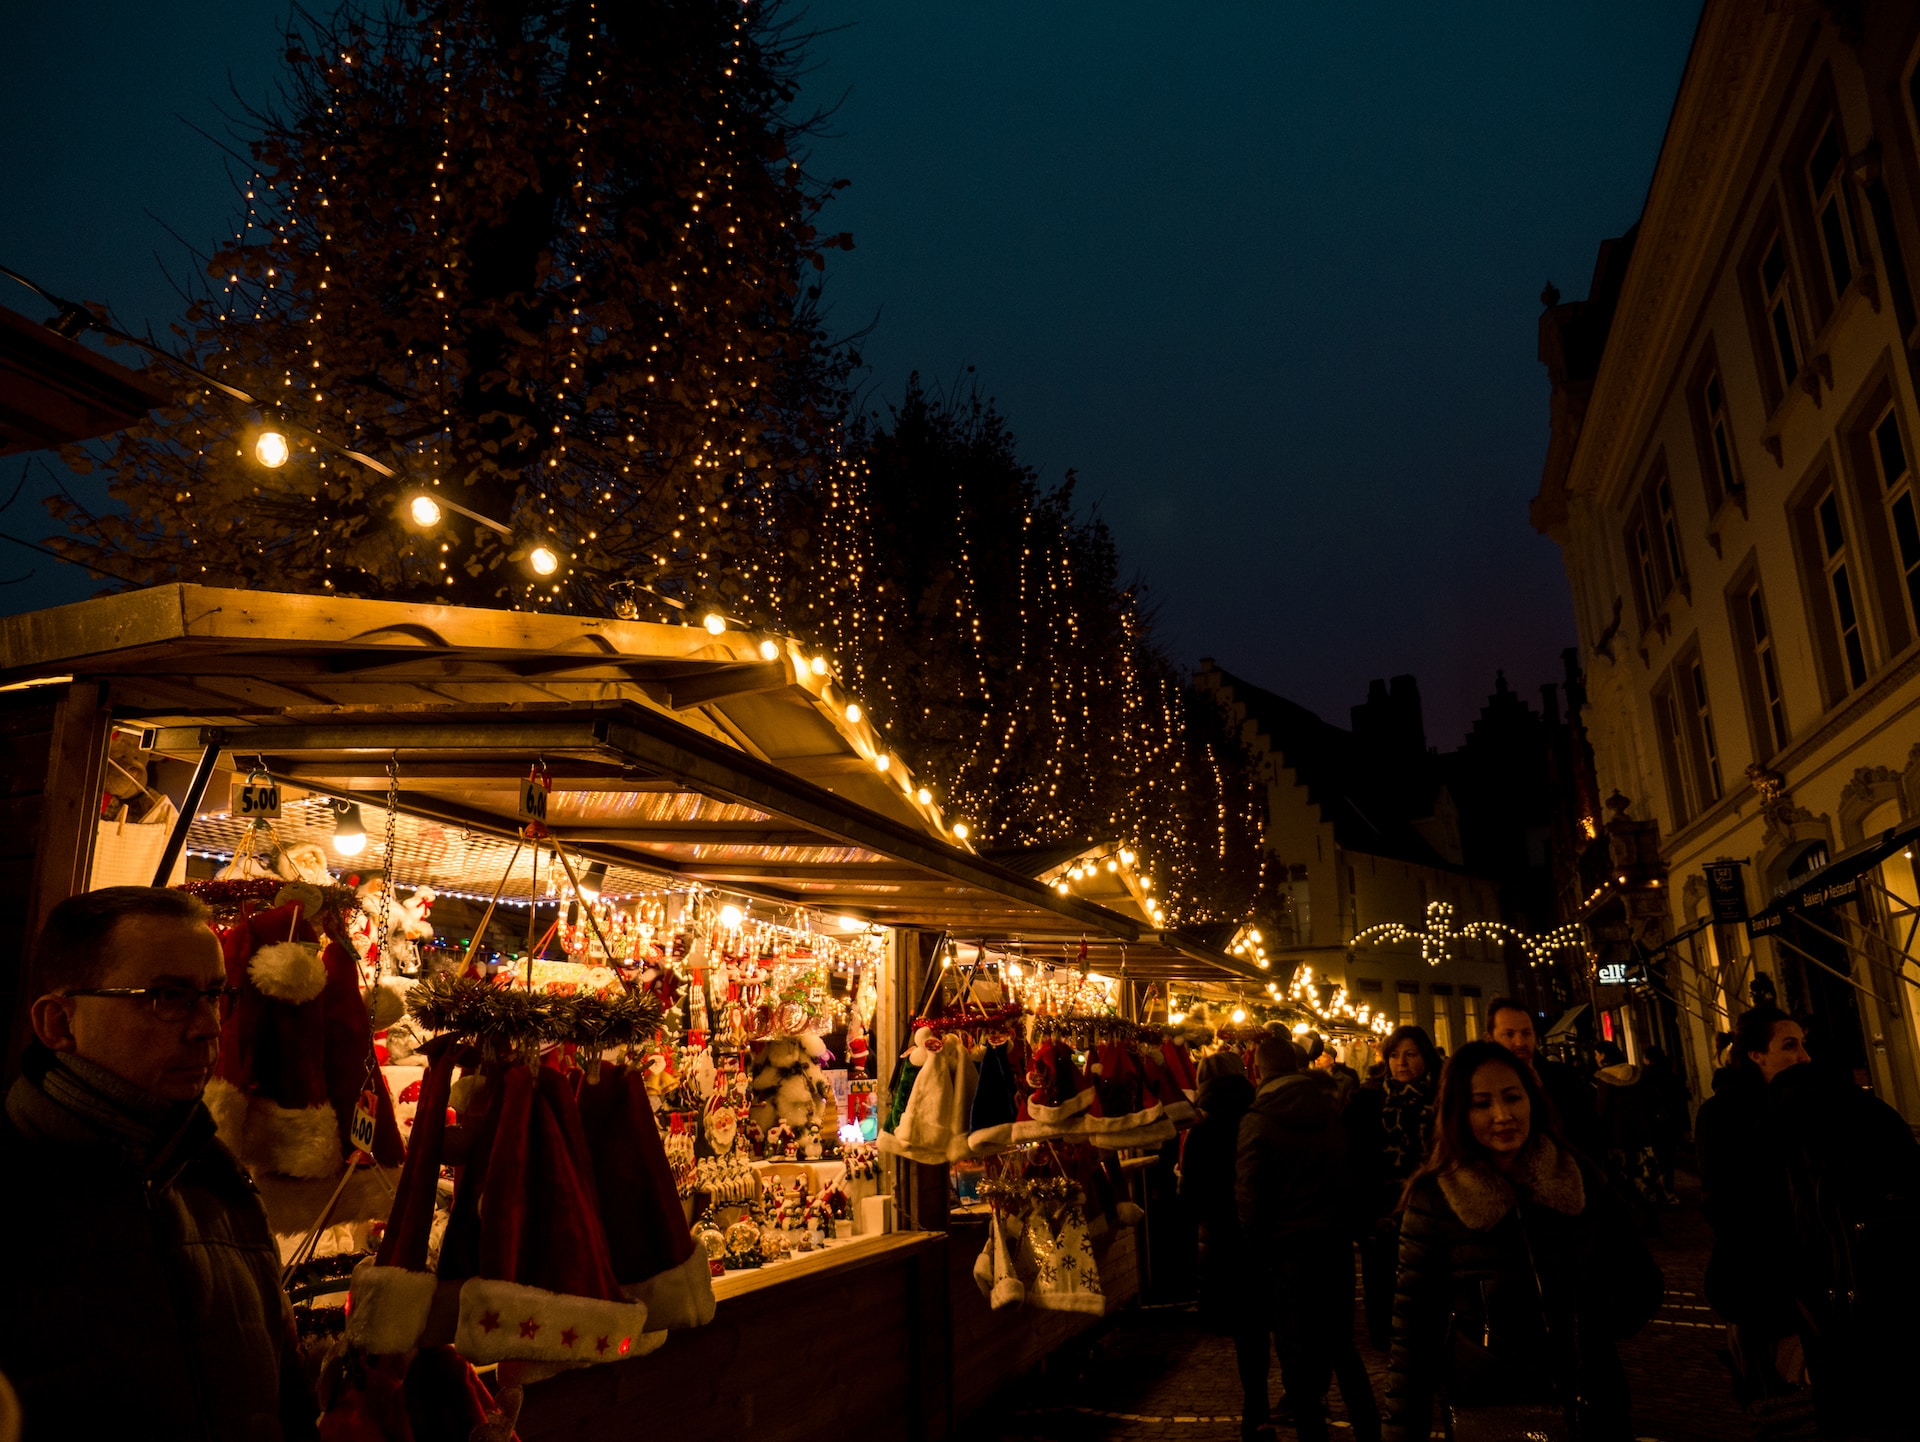 A Christmas market in Bruges.